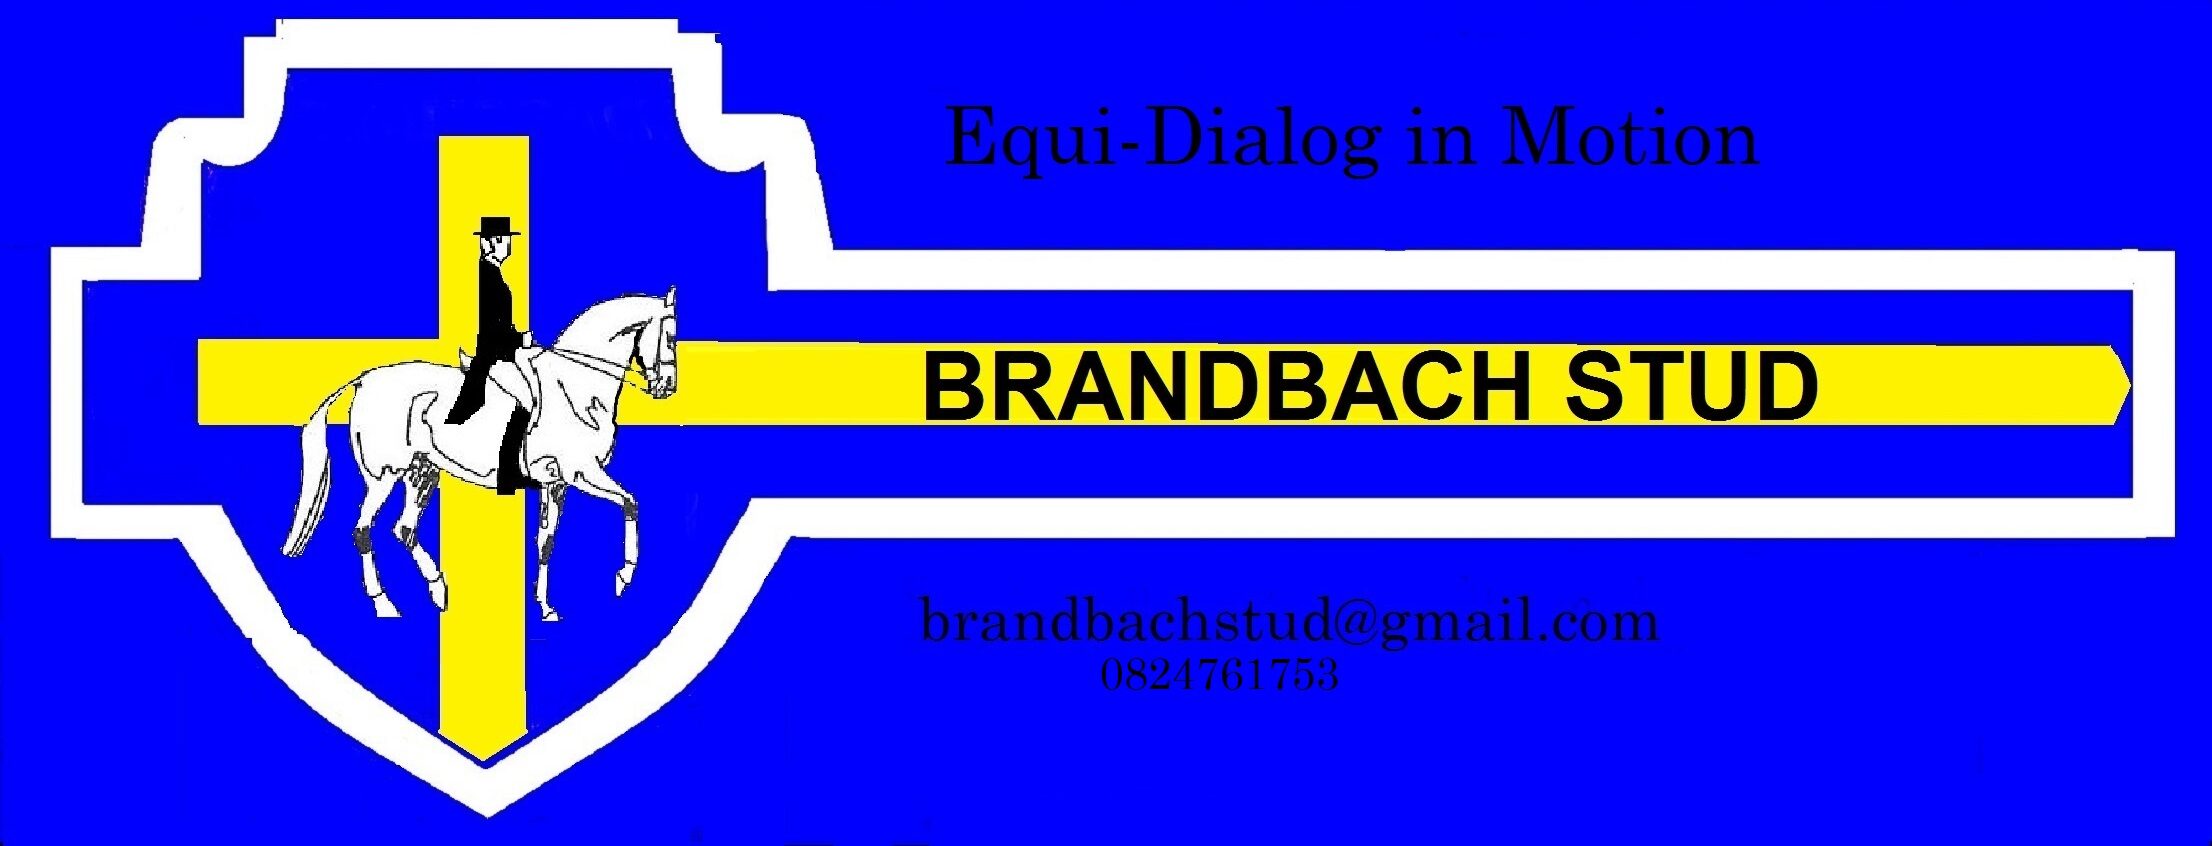 Brandbach logo